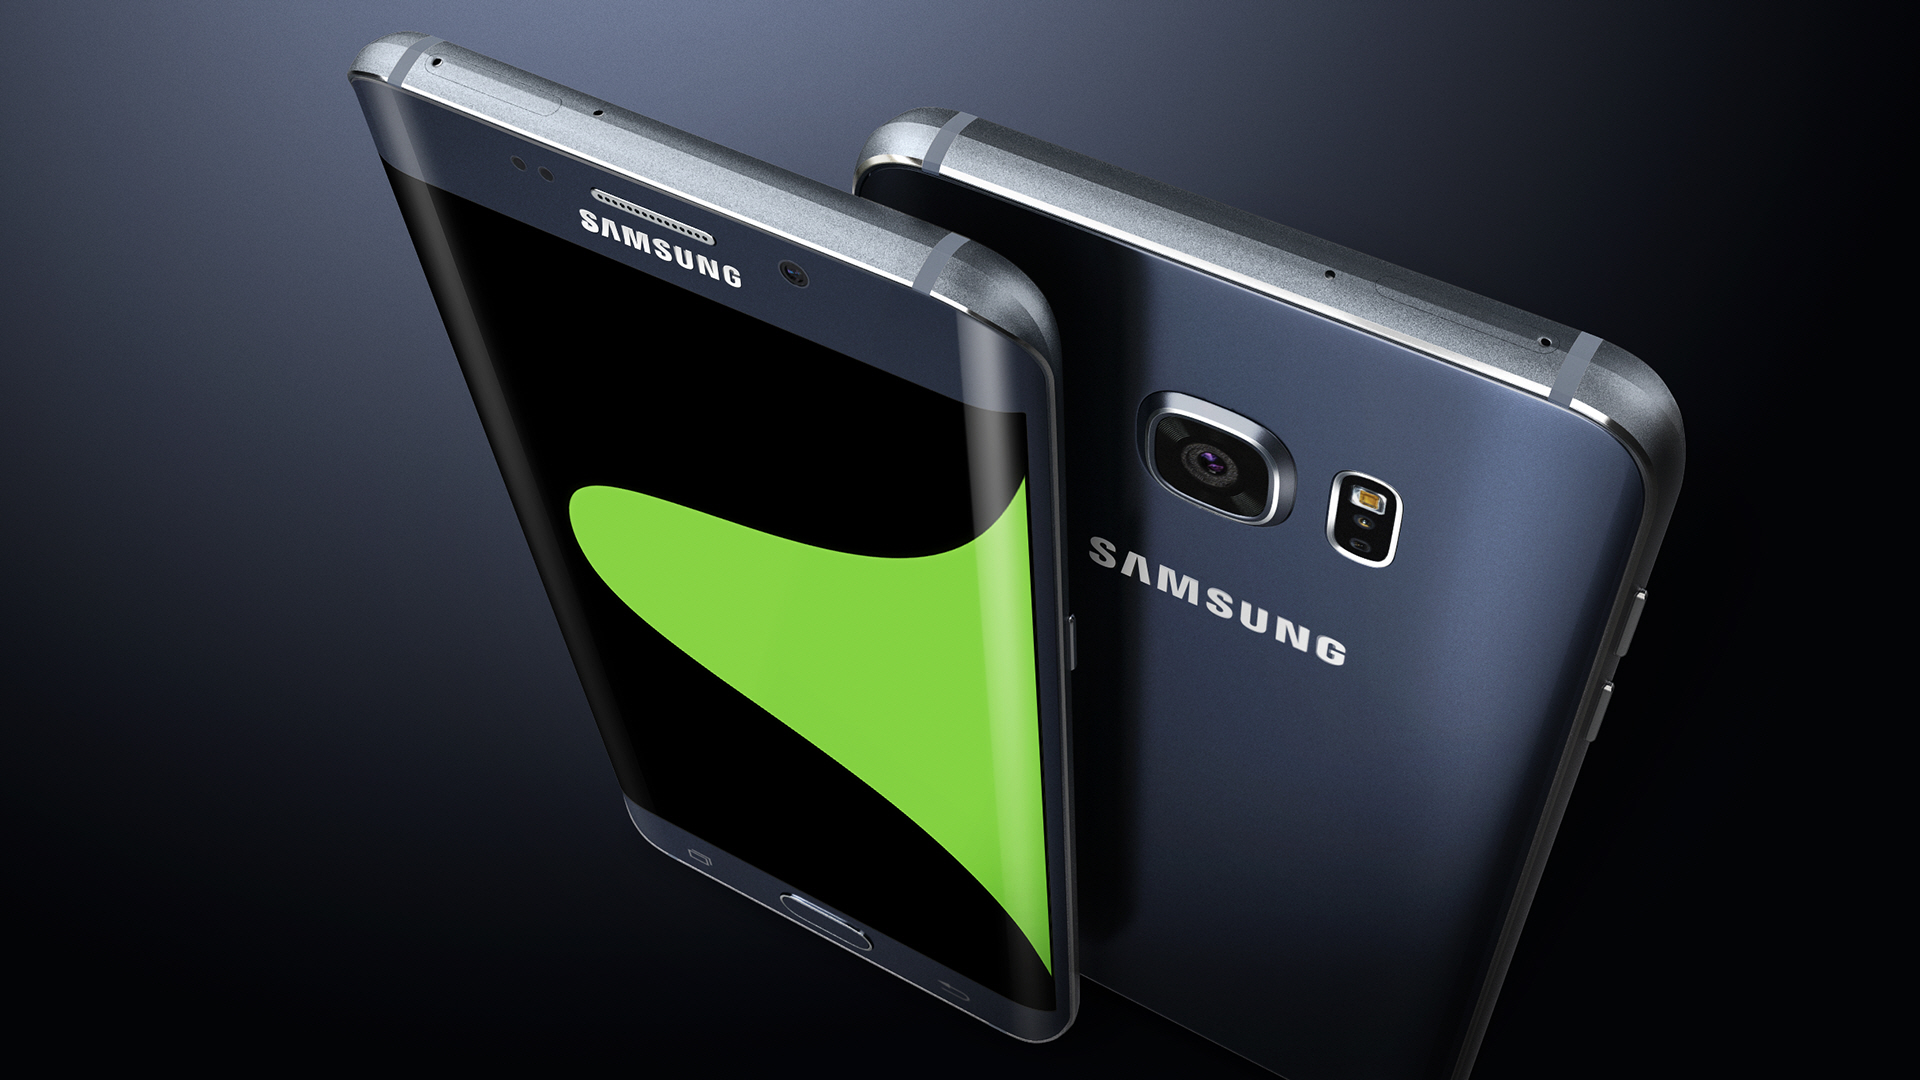 Samsung galaxy new. Samsung Galaxy s7 Edge. Galaxy s6 Edge+. Самсунг Galaxy s6 Edge Plus. S6 Edge Plus.